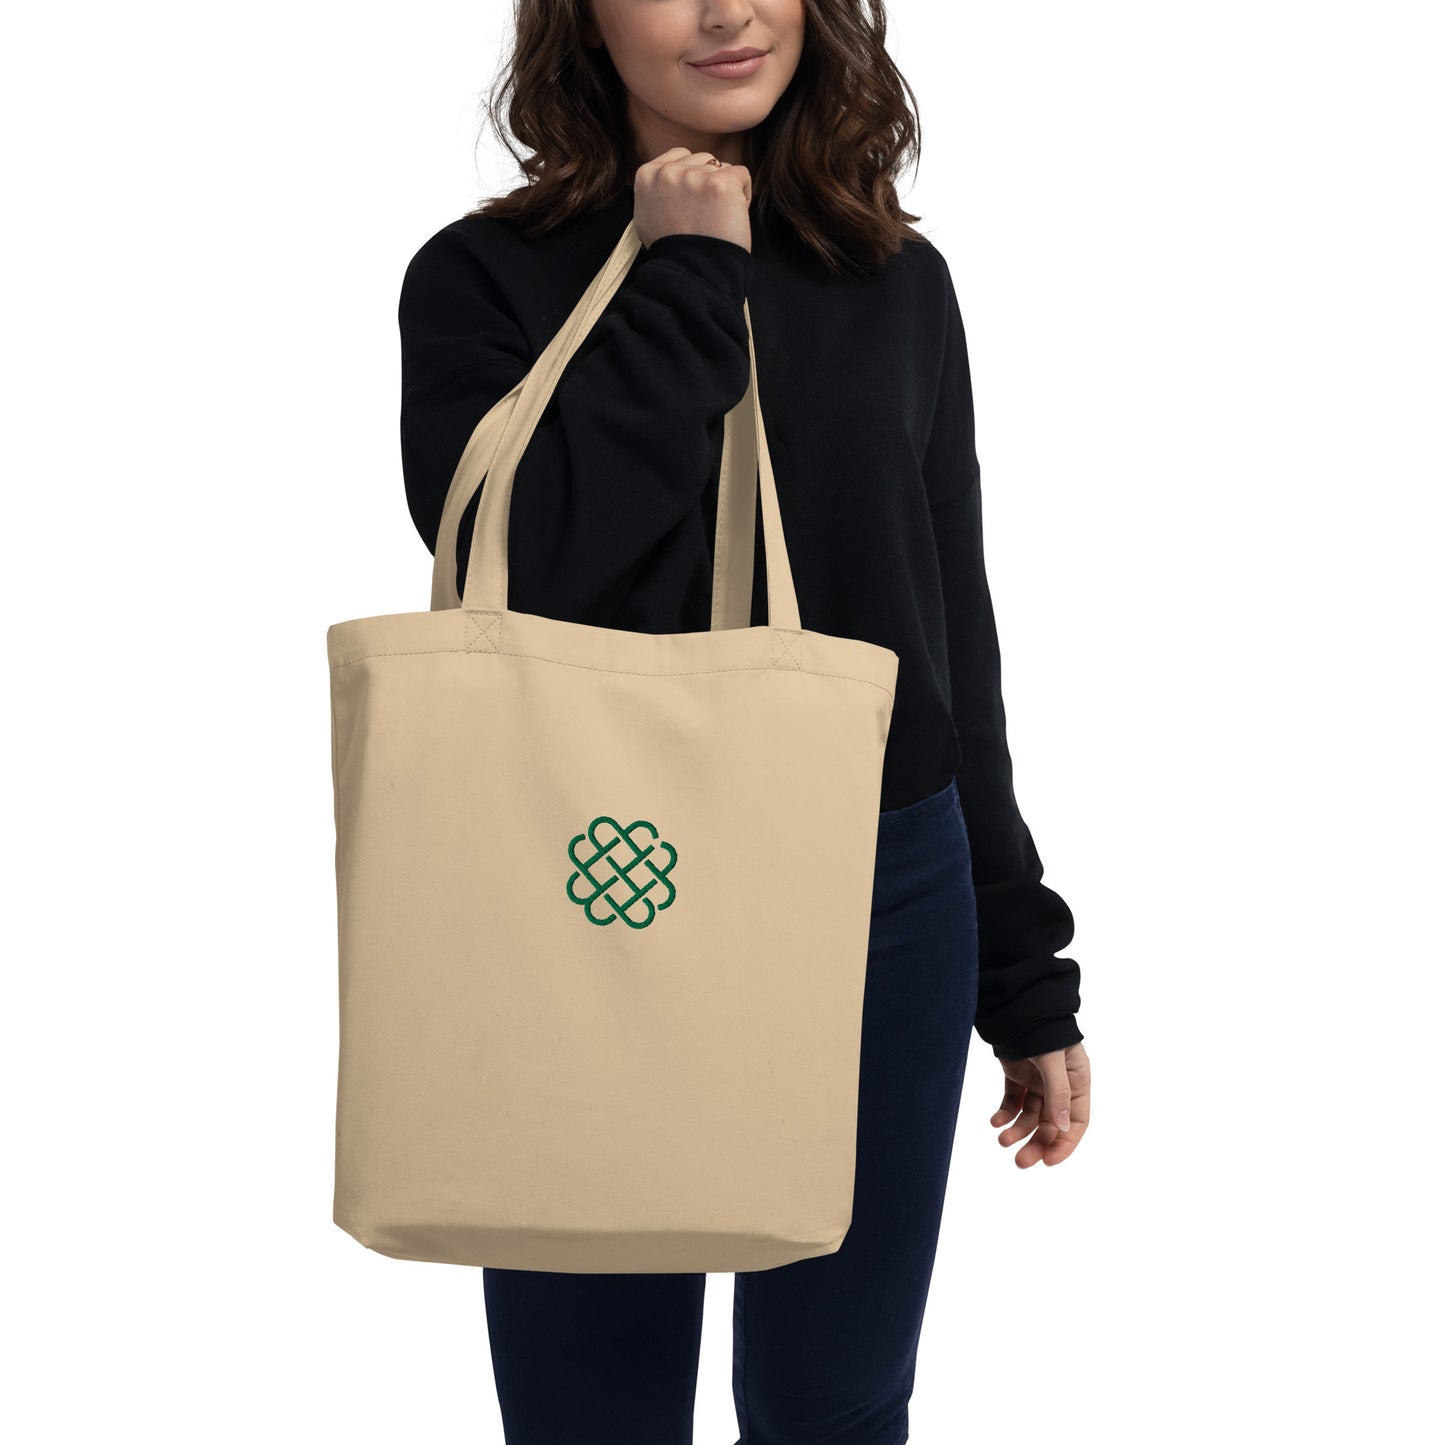 Emerald Stay - Eco Tote Bag